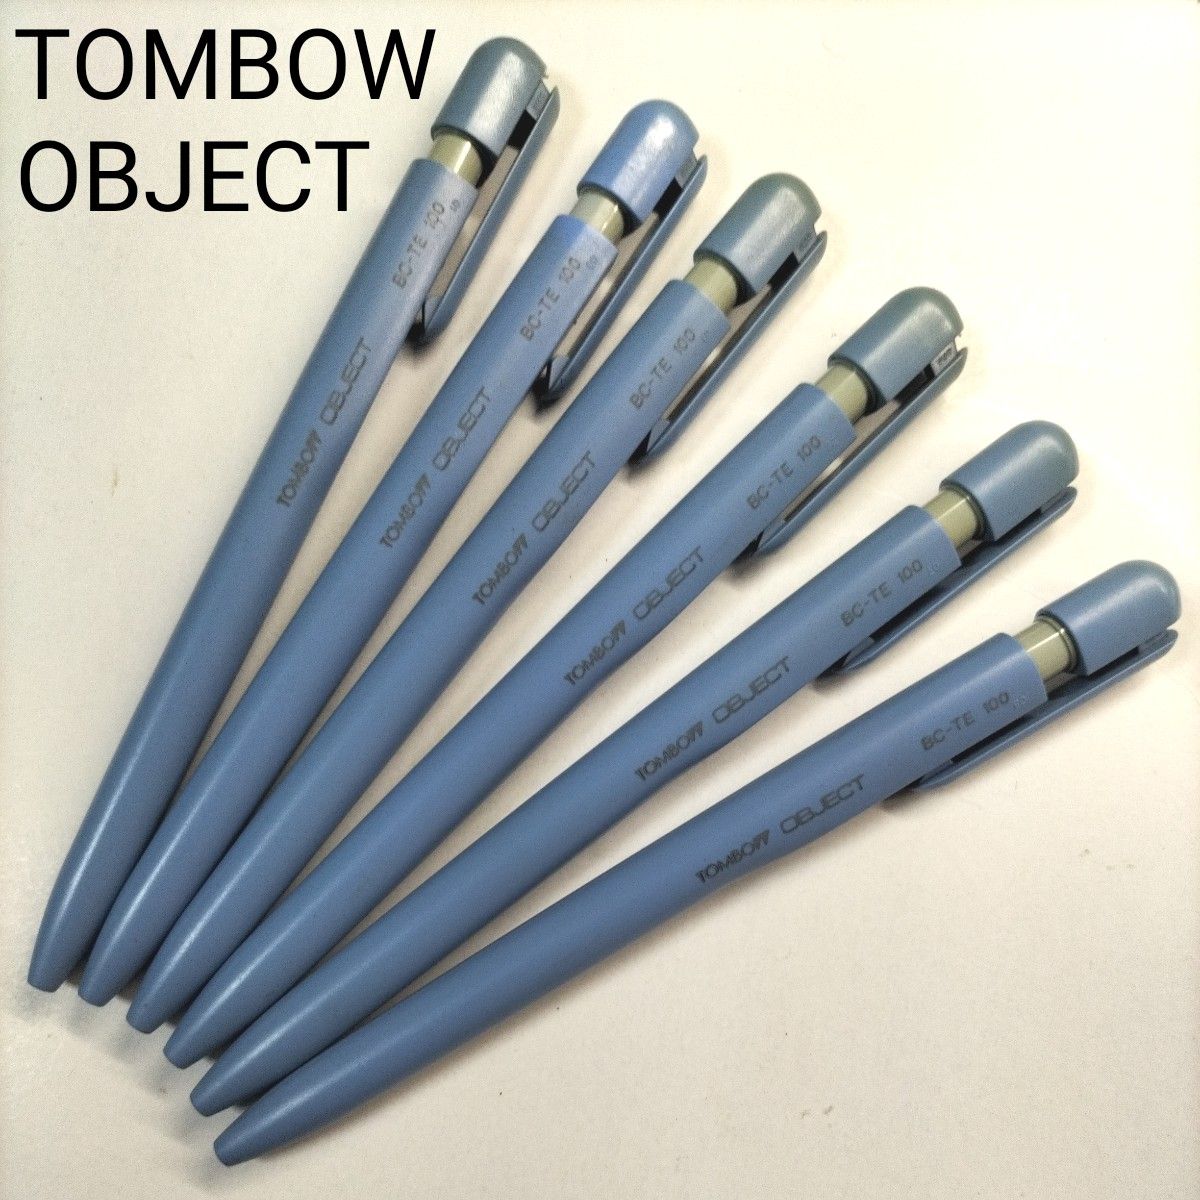 Tombow トンボ鉛筆 OBJECT BC-TE 100 オブジェクト ボールペン まとめ売り ブルー 水色 廃番 廃盤